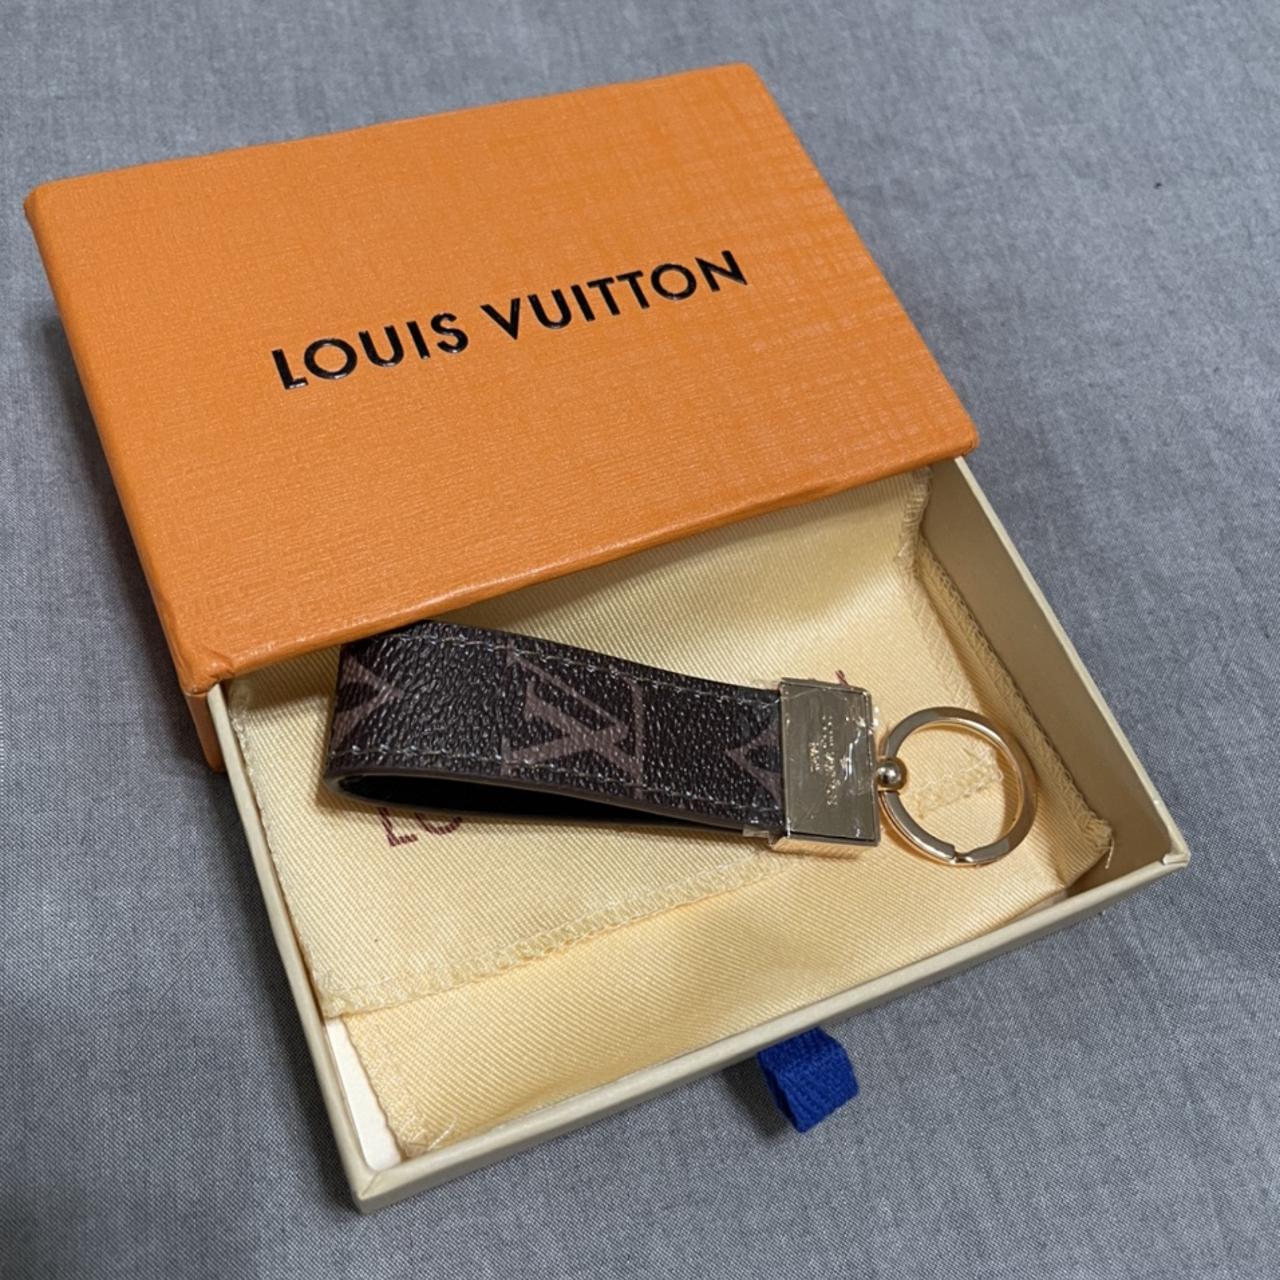 Louis Vuitton Keychain Dhgate